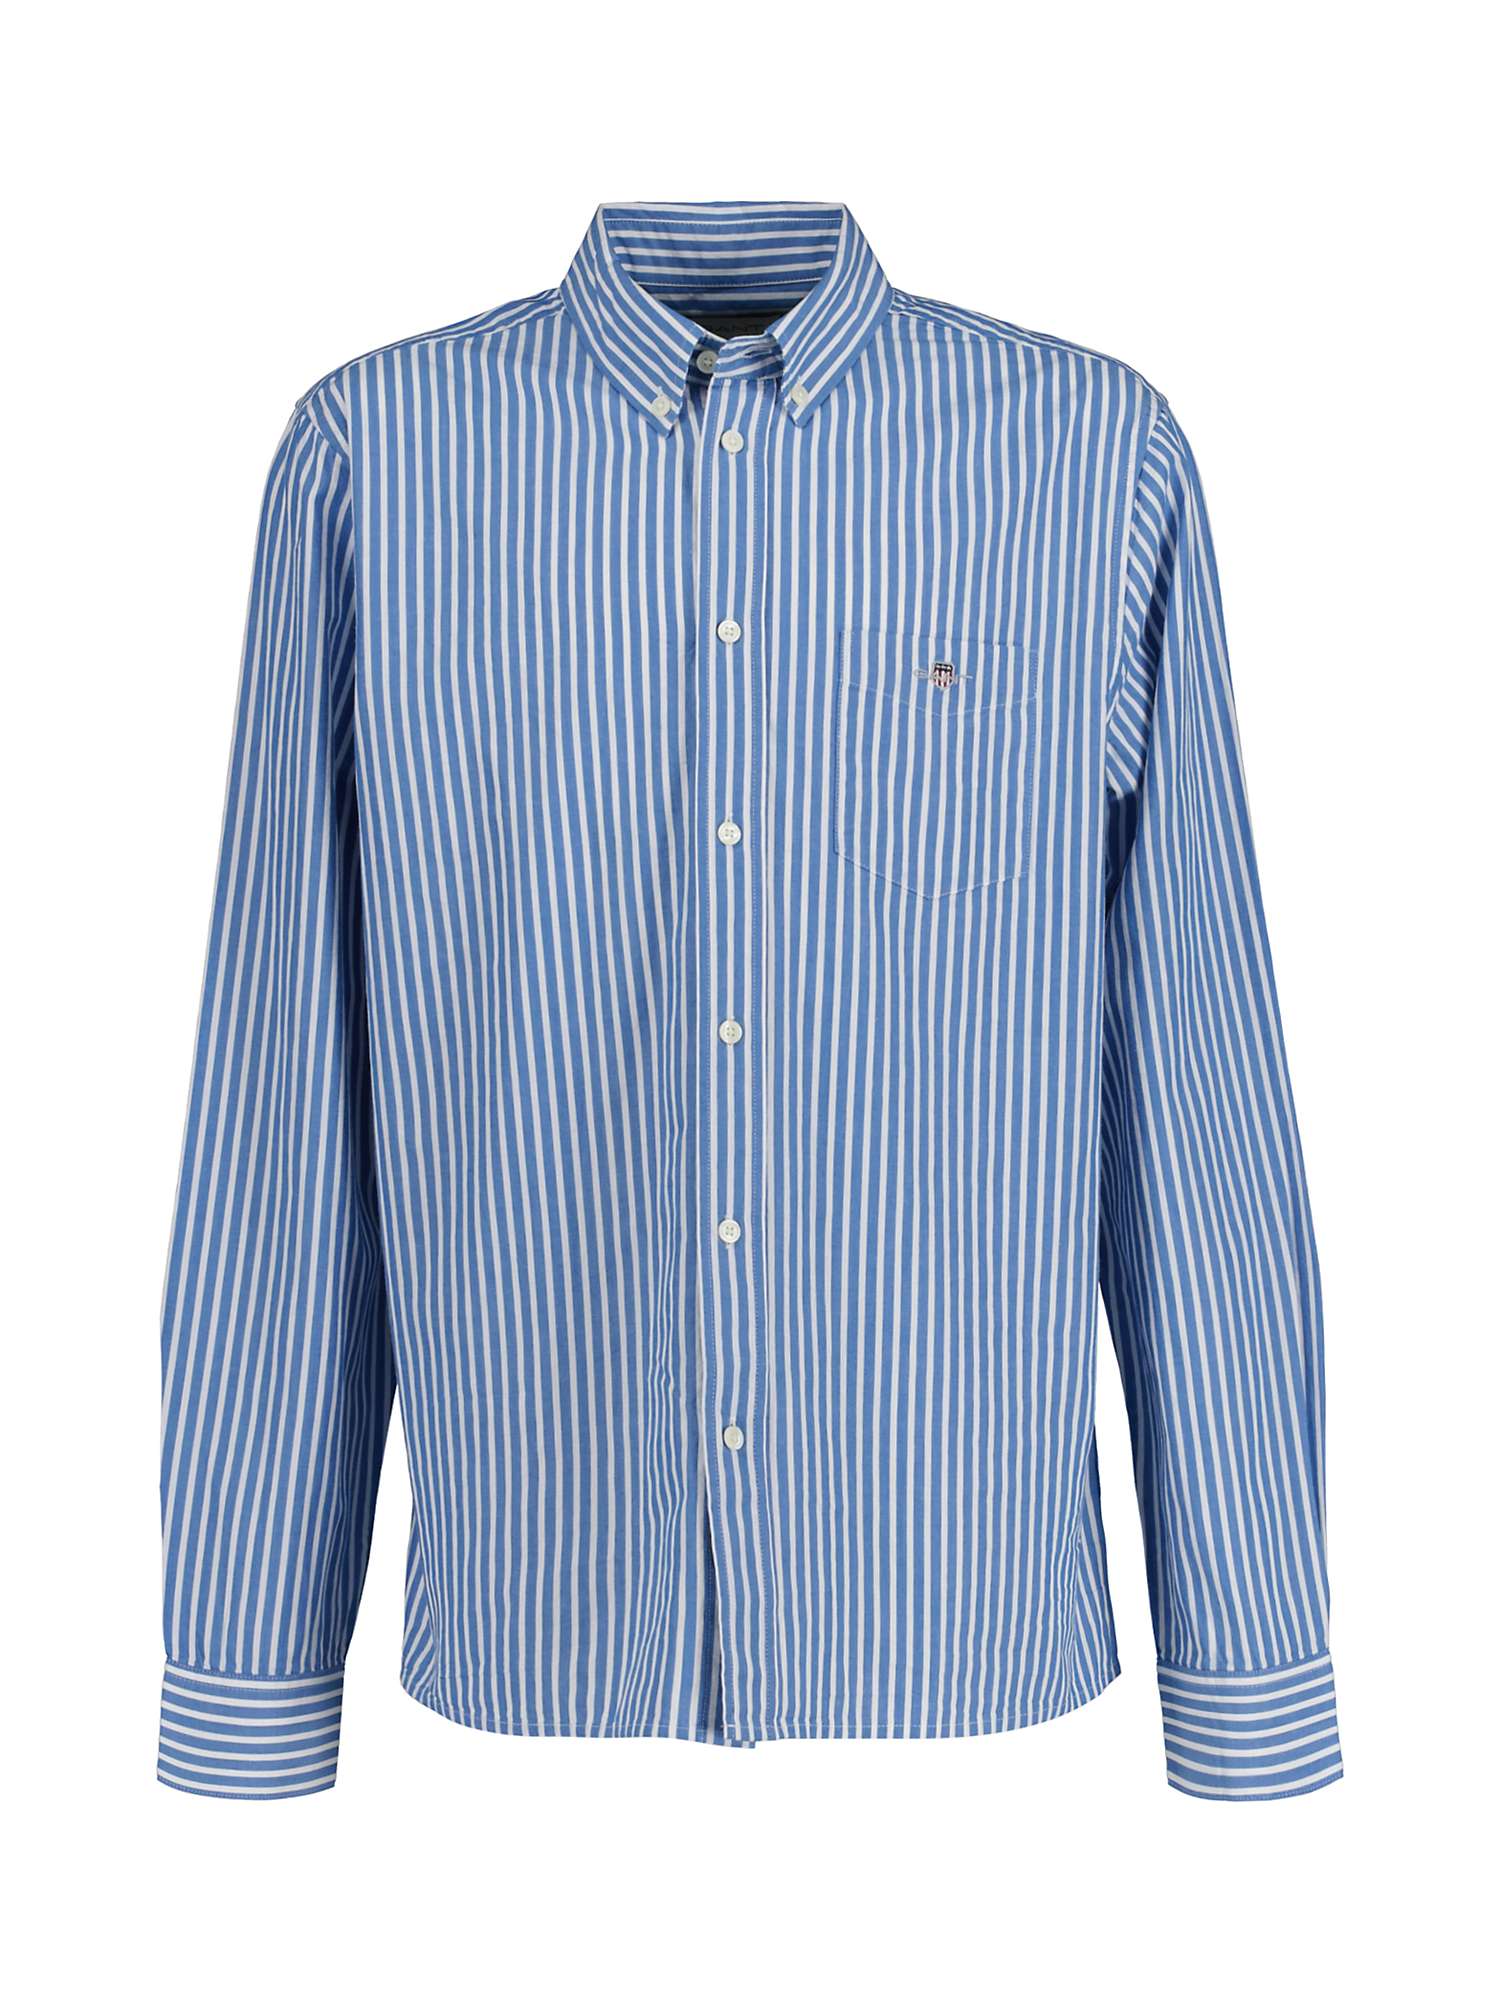 Buy GANT Kids' Stripe Shield Long Sleeve Shirt, Blue/White Online at johnlewis.com